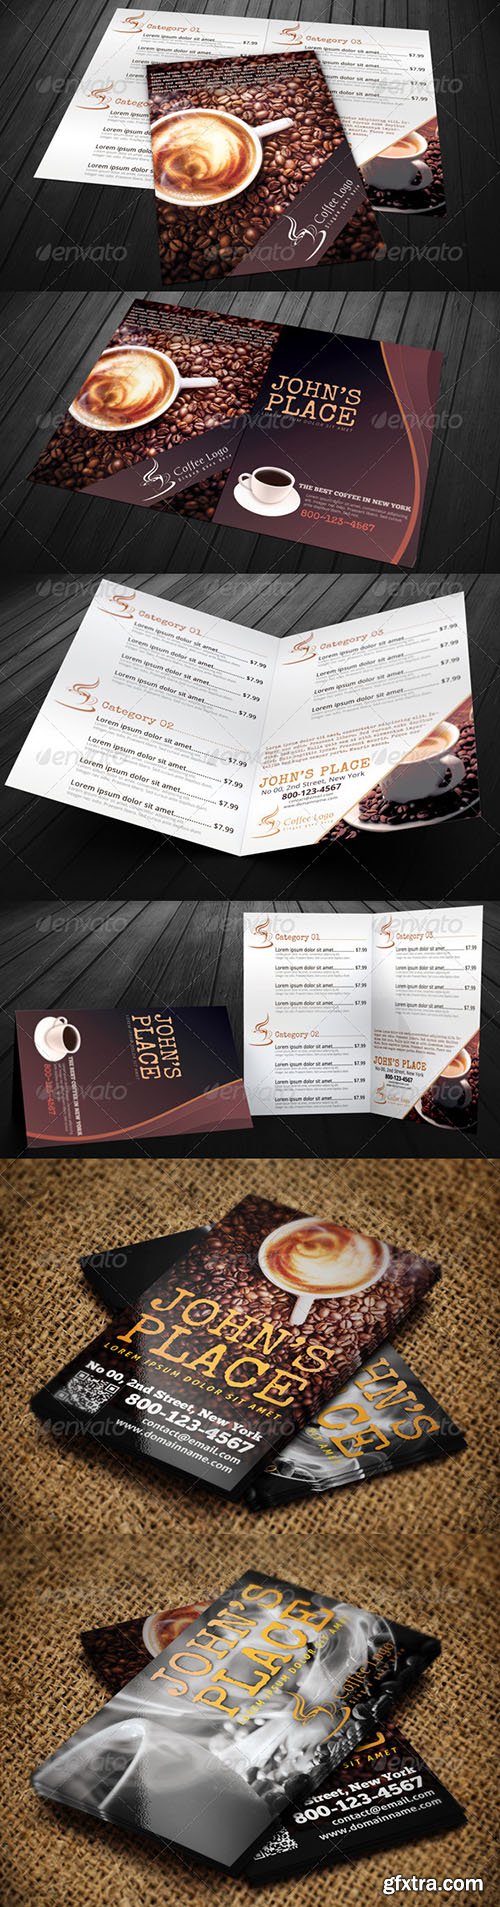 GraphicRiver - Food Menu Bundle with Business Card 6317919